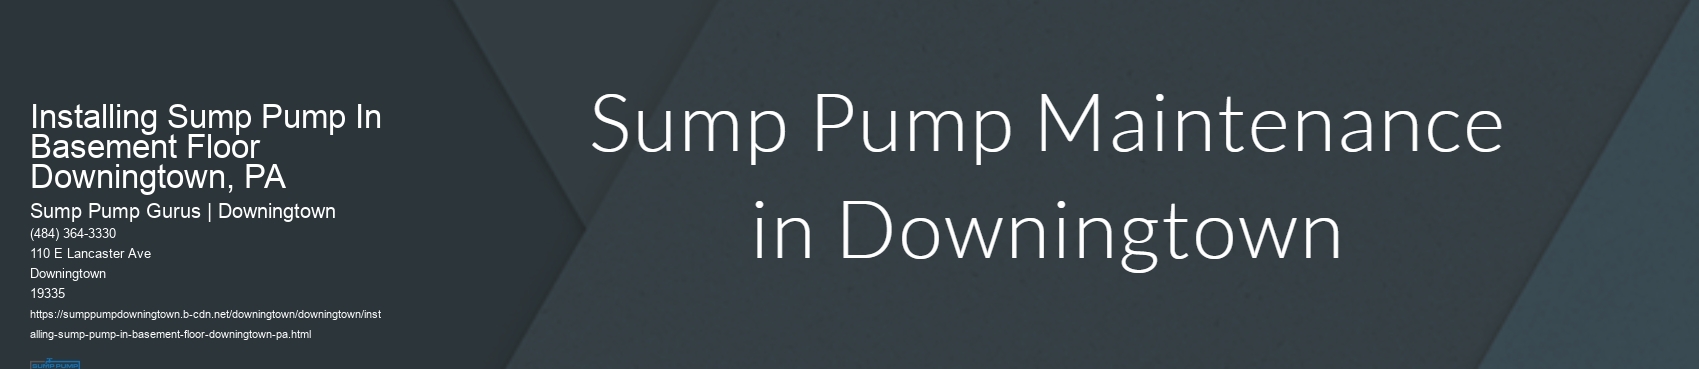 Installing Sump Pump In Basement Floor Downingtown, PA